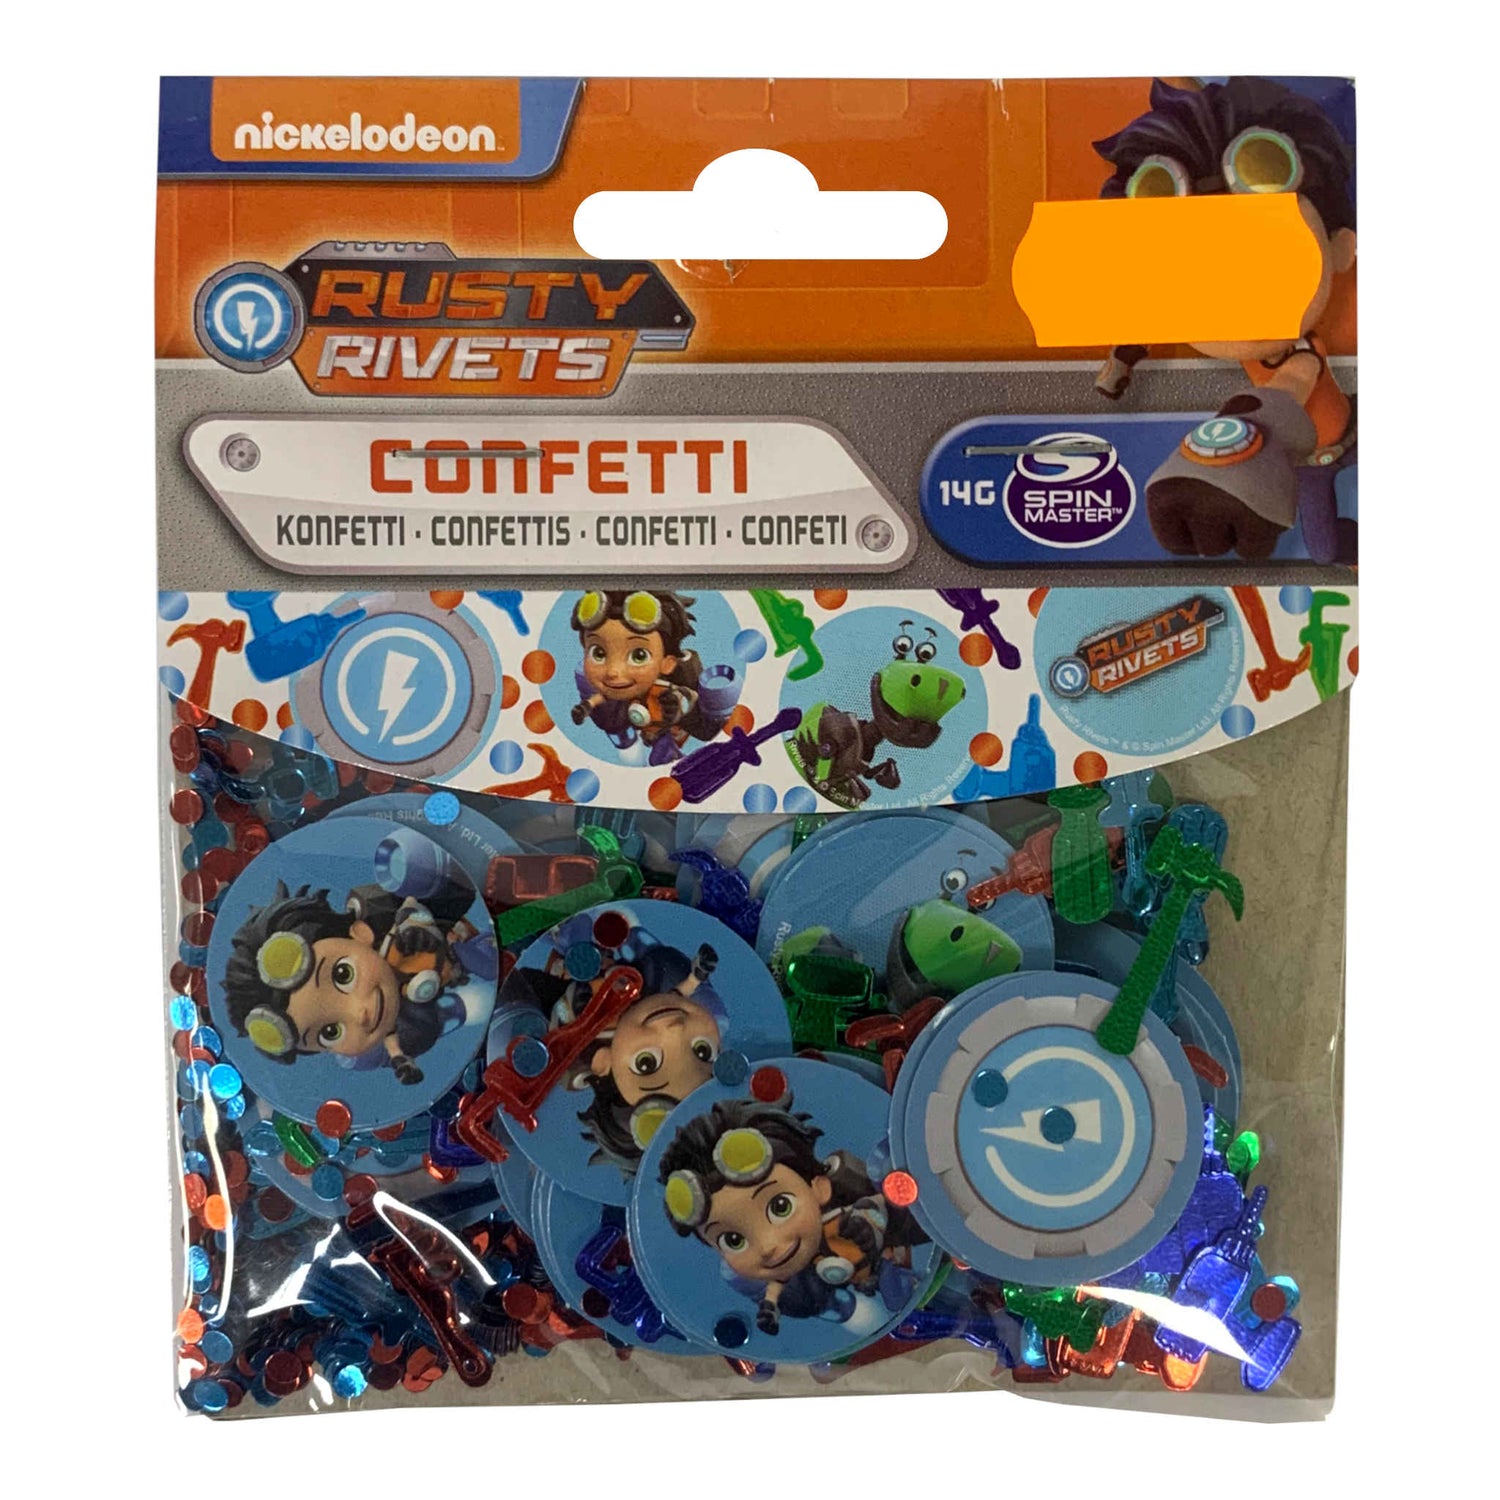 Nickelodeon Rusty Rivets Confetti